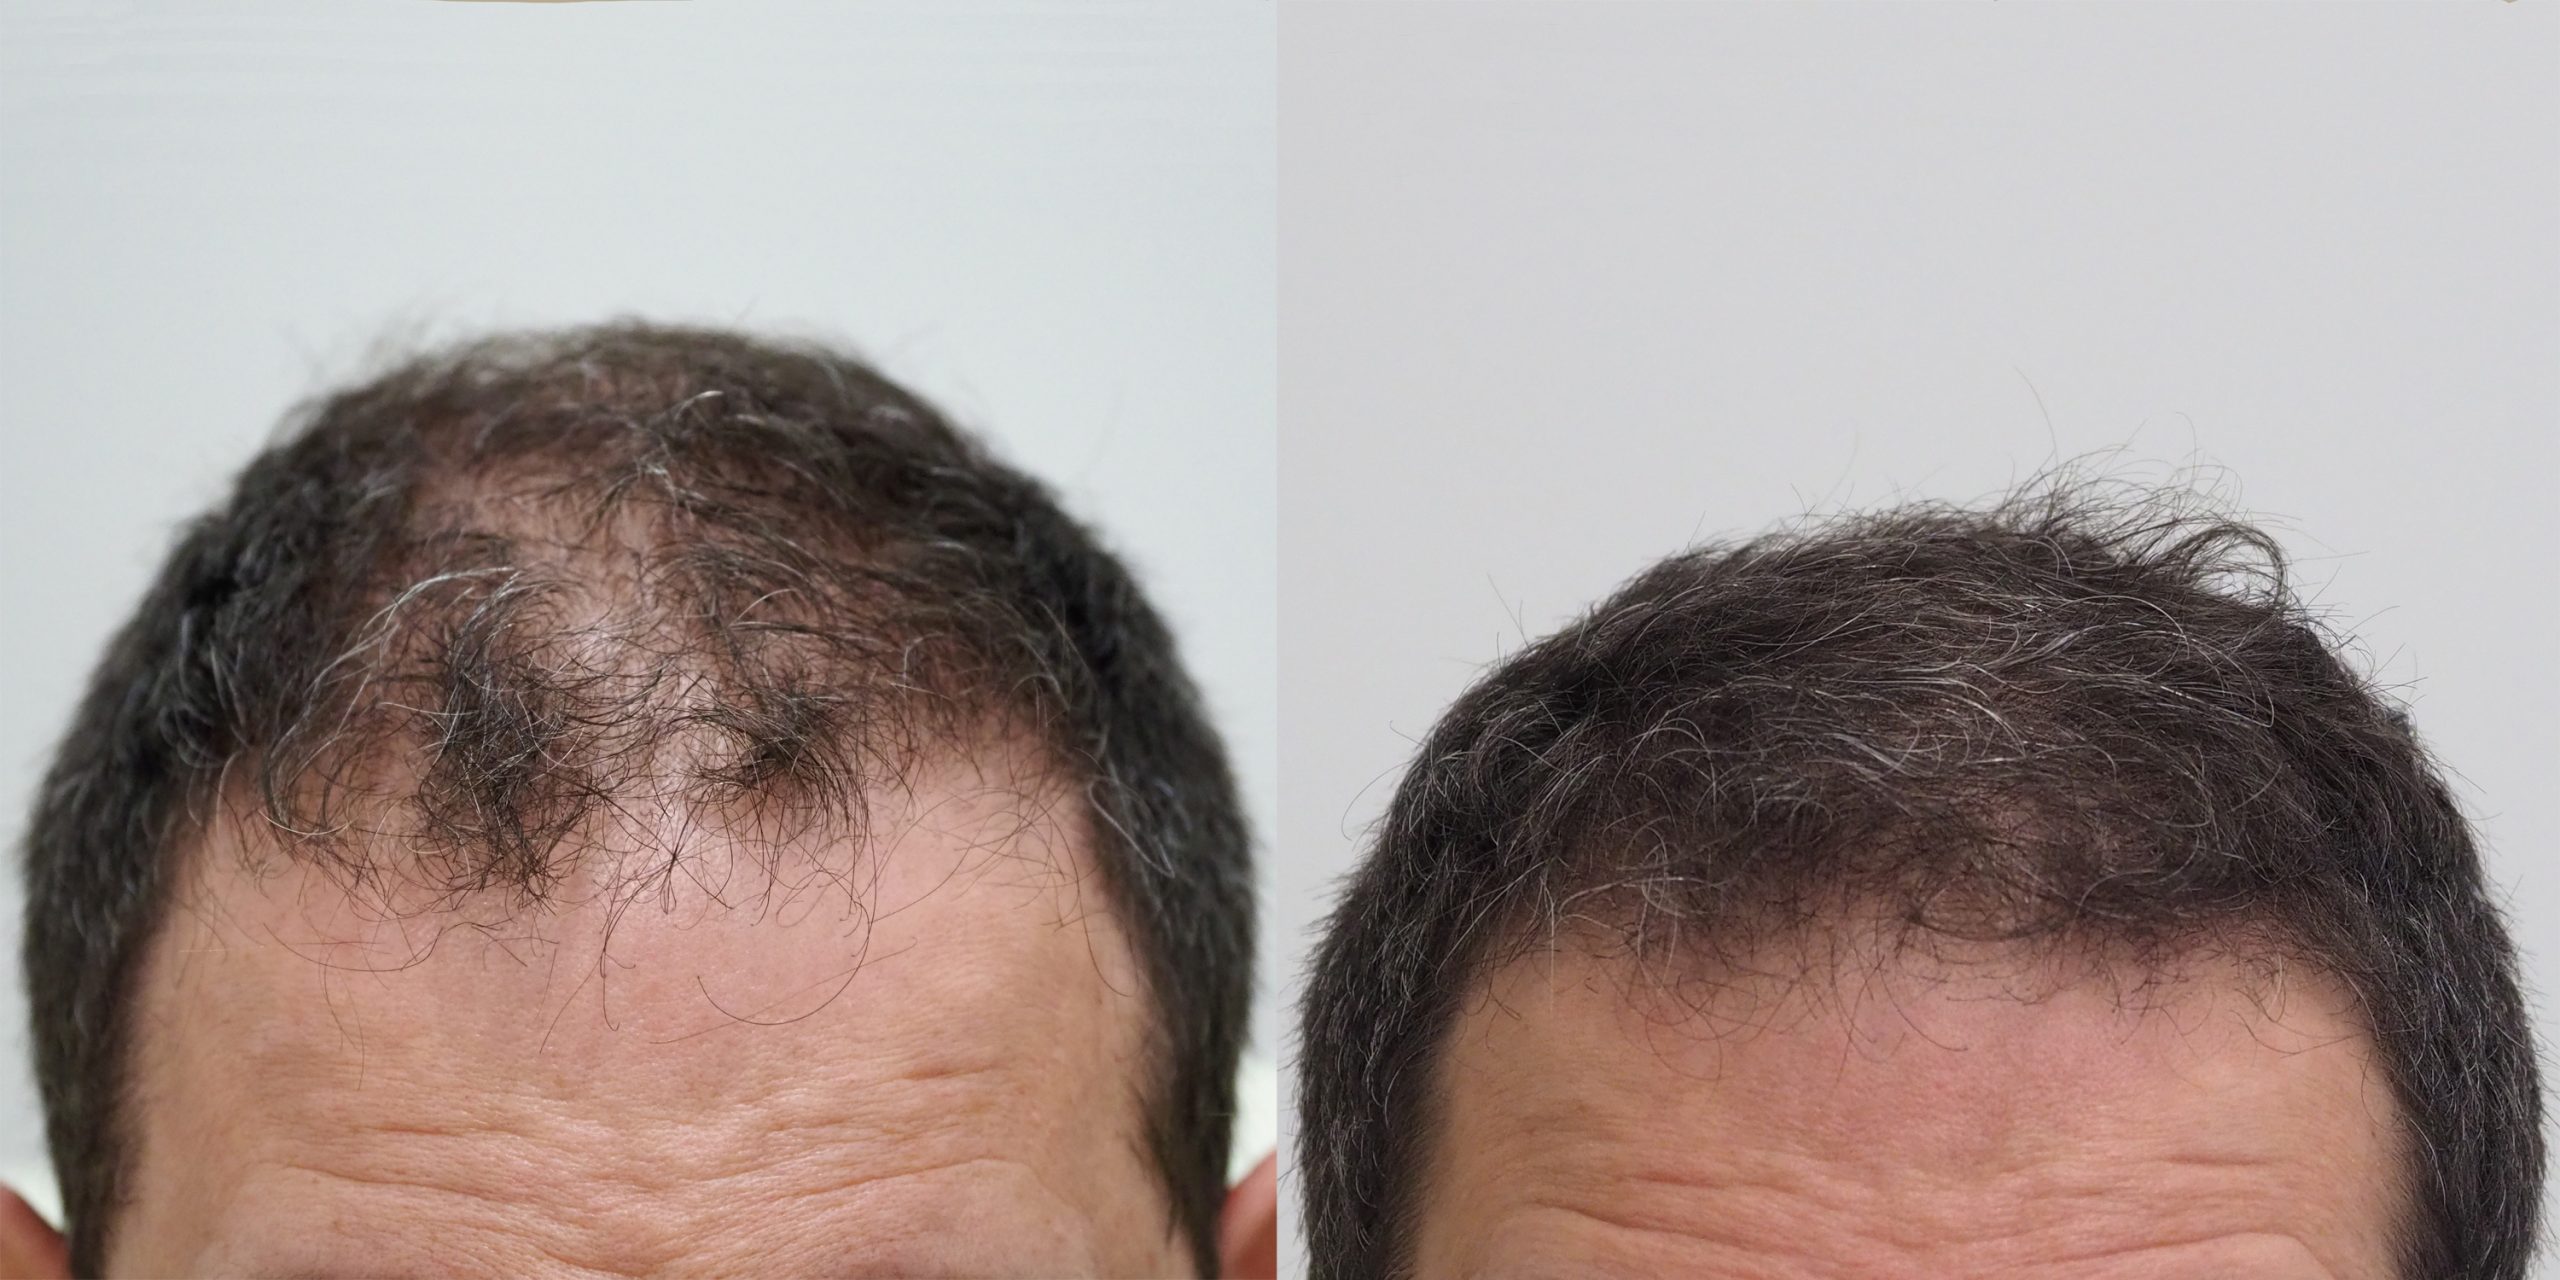 alopecia androgenetica tratamiento toluca